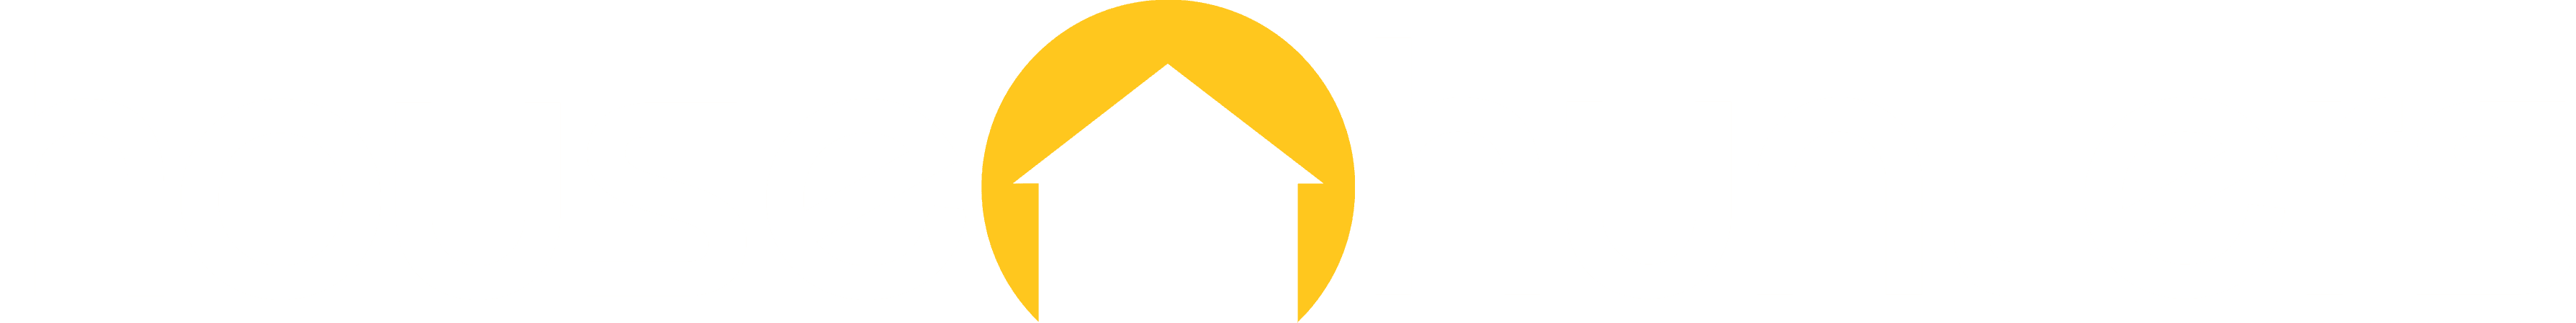 House Hunters logo